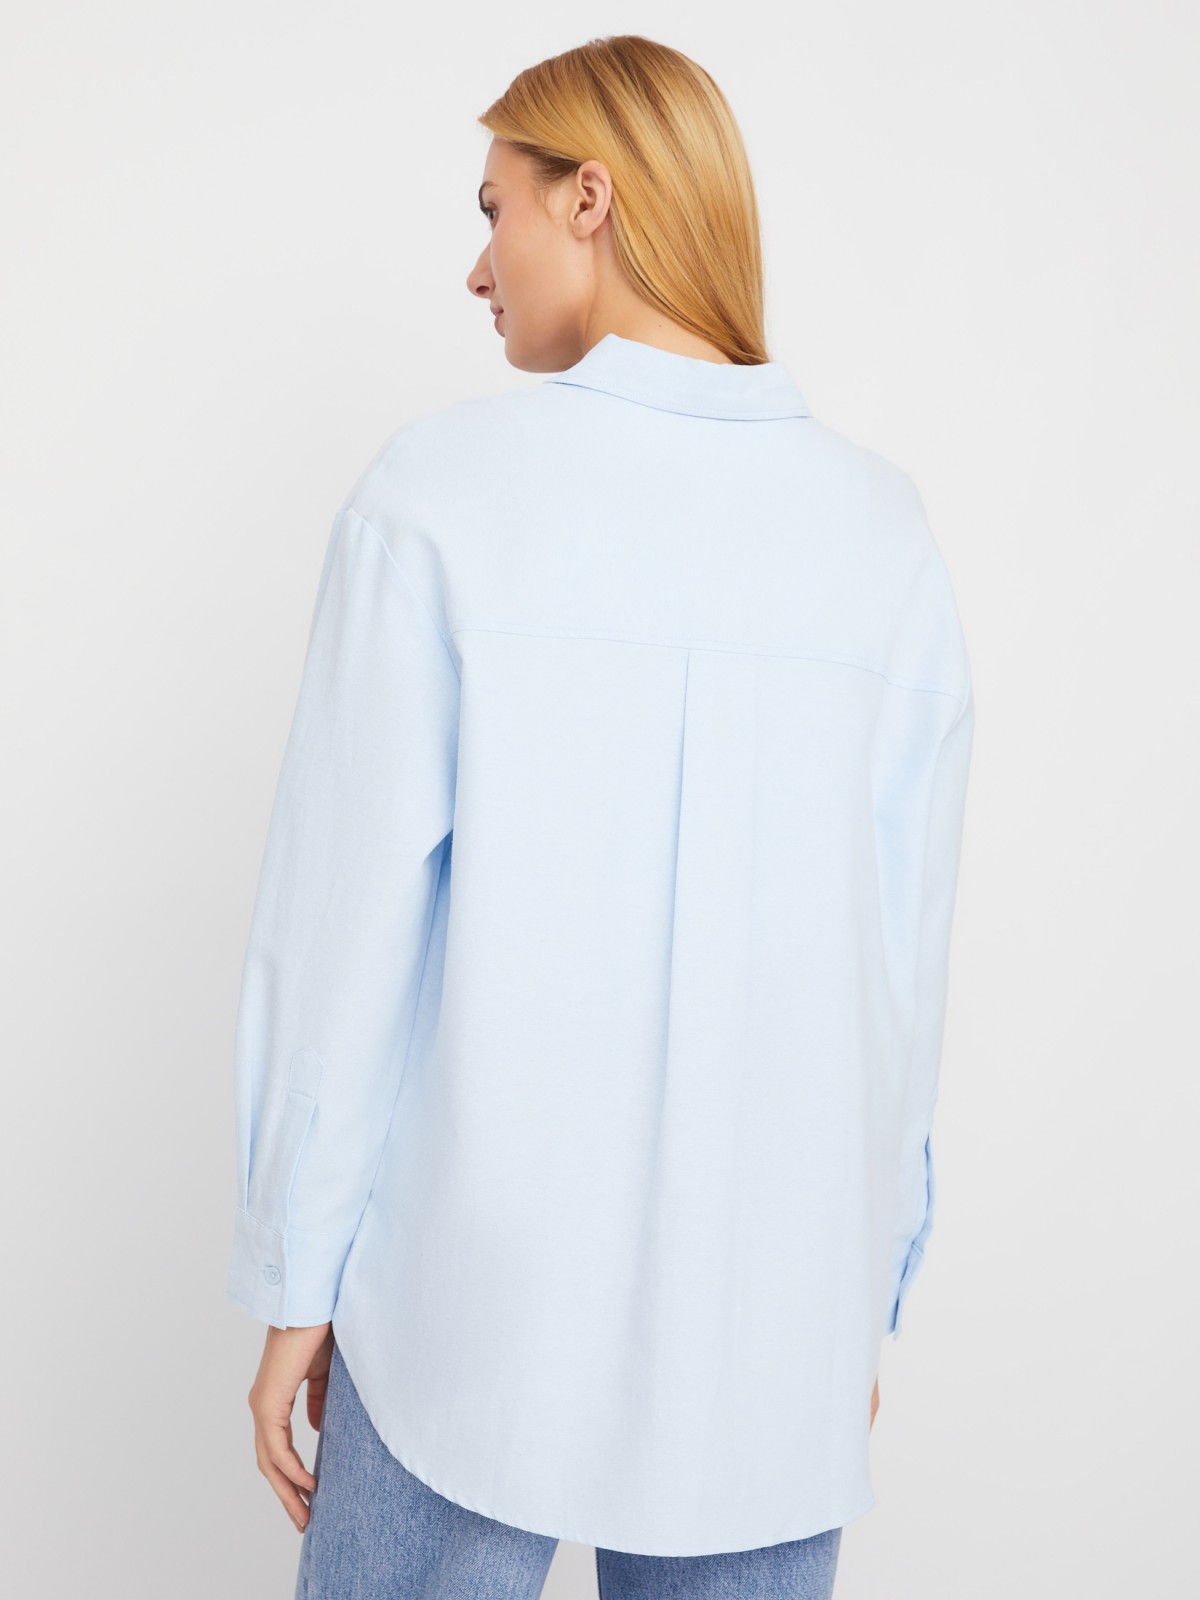 Рубашка свободного удлинённого силуэта оверсайз zolla 024111159433, цвет светло-голубой, размер XS - фото 6